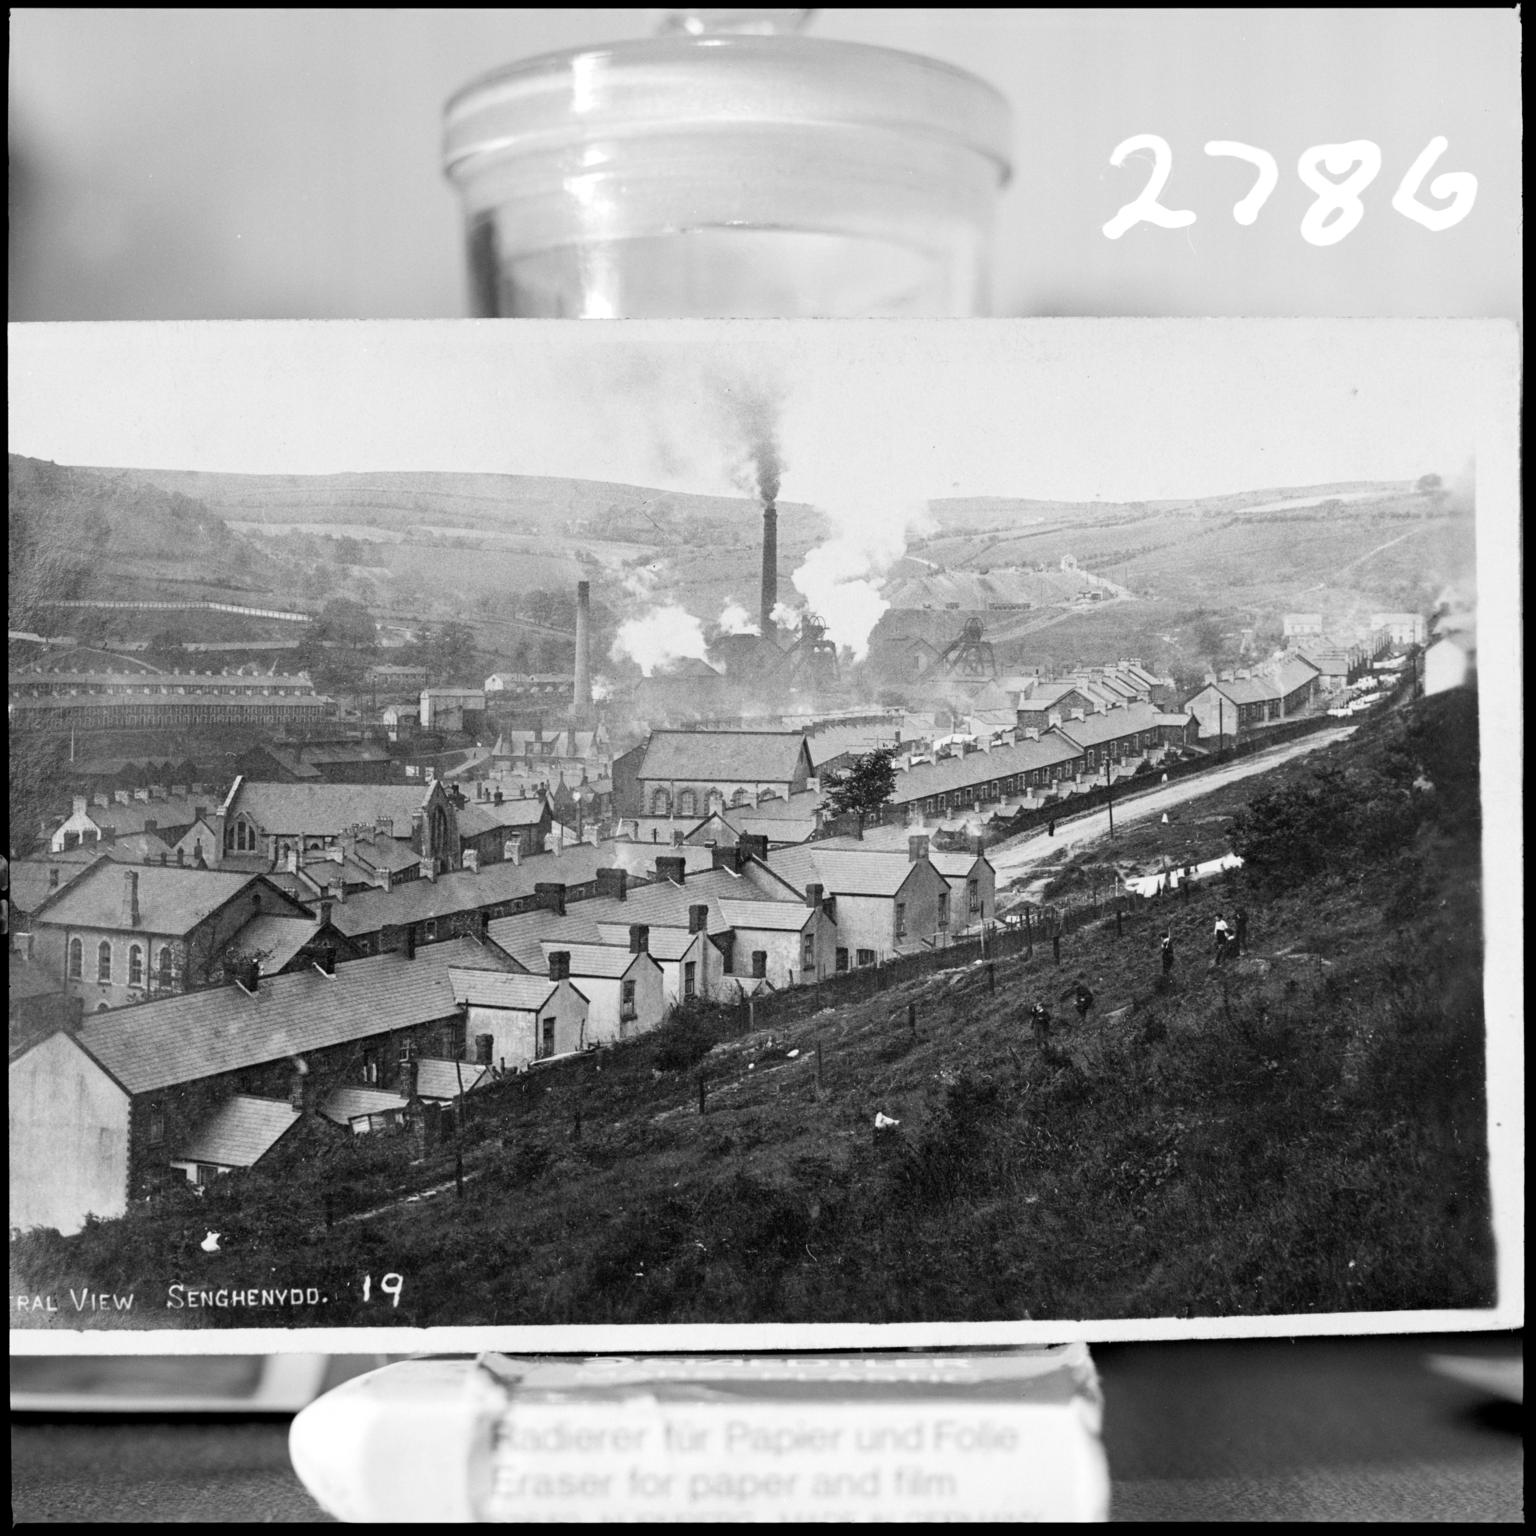 Universal Colliery, Senghenydd, film negative